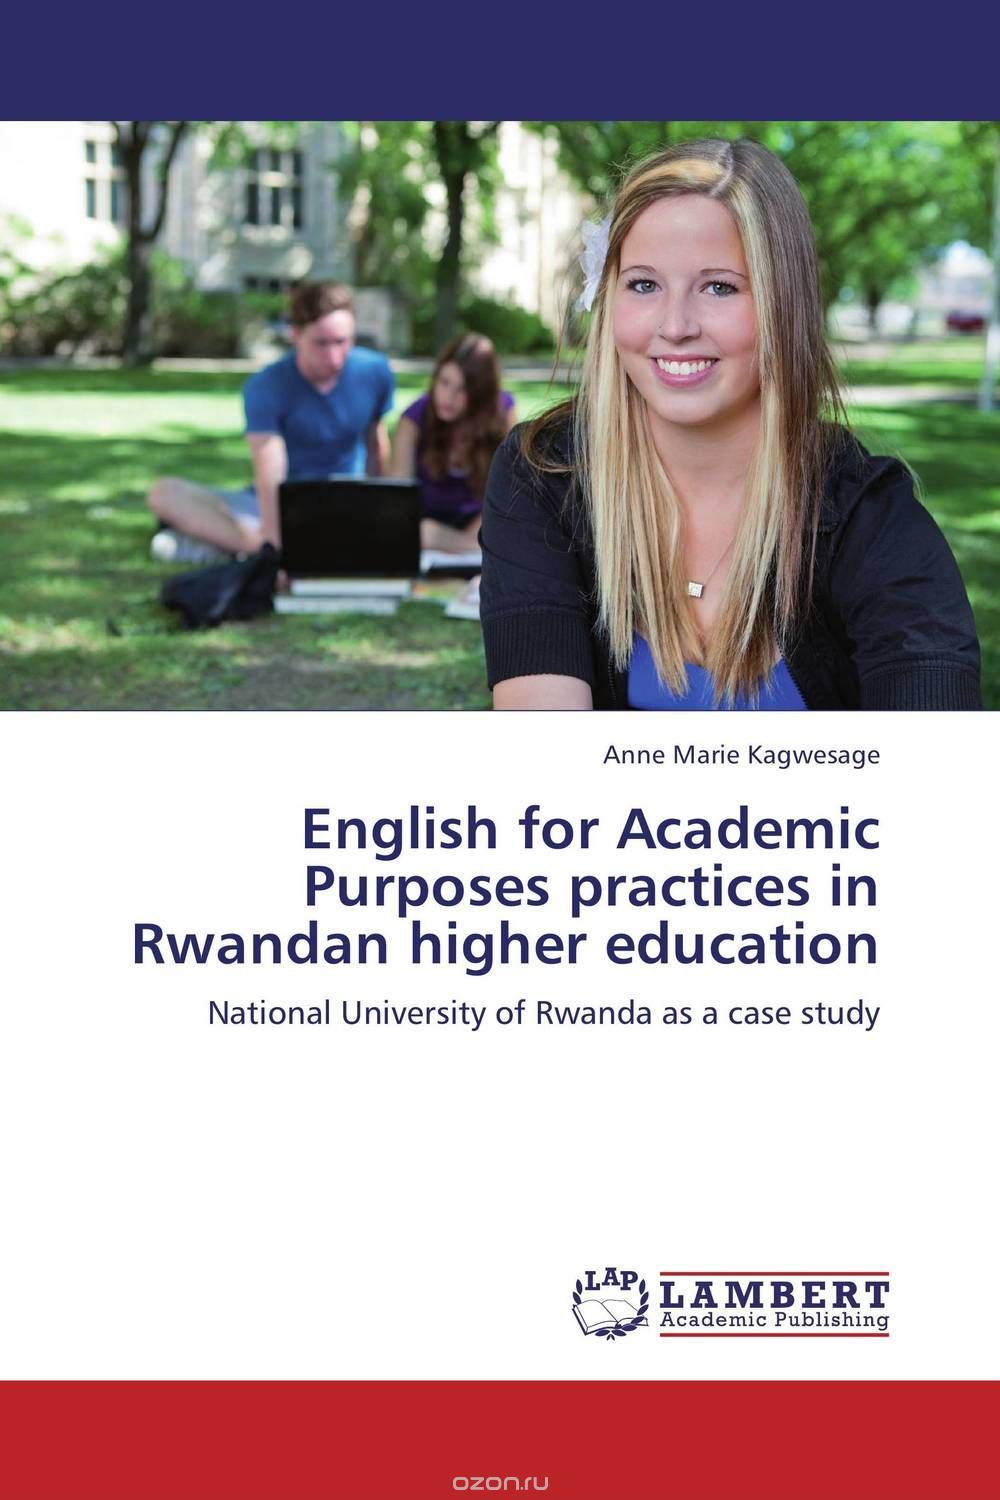 Скачать книгу "English for Academic Purposes practices in Rwandan higher education"